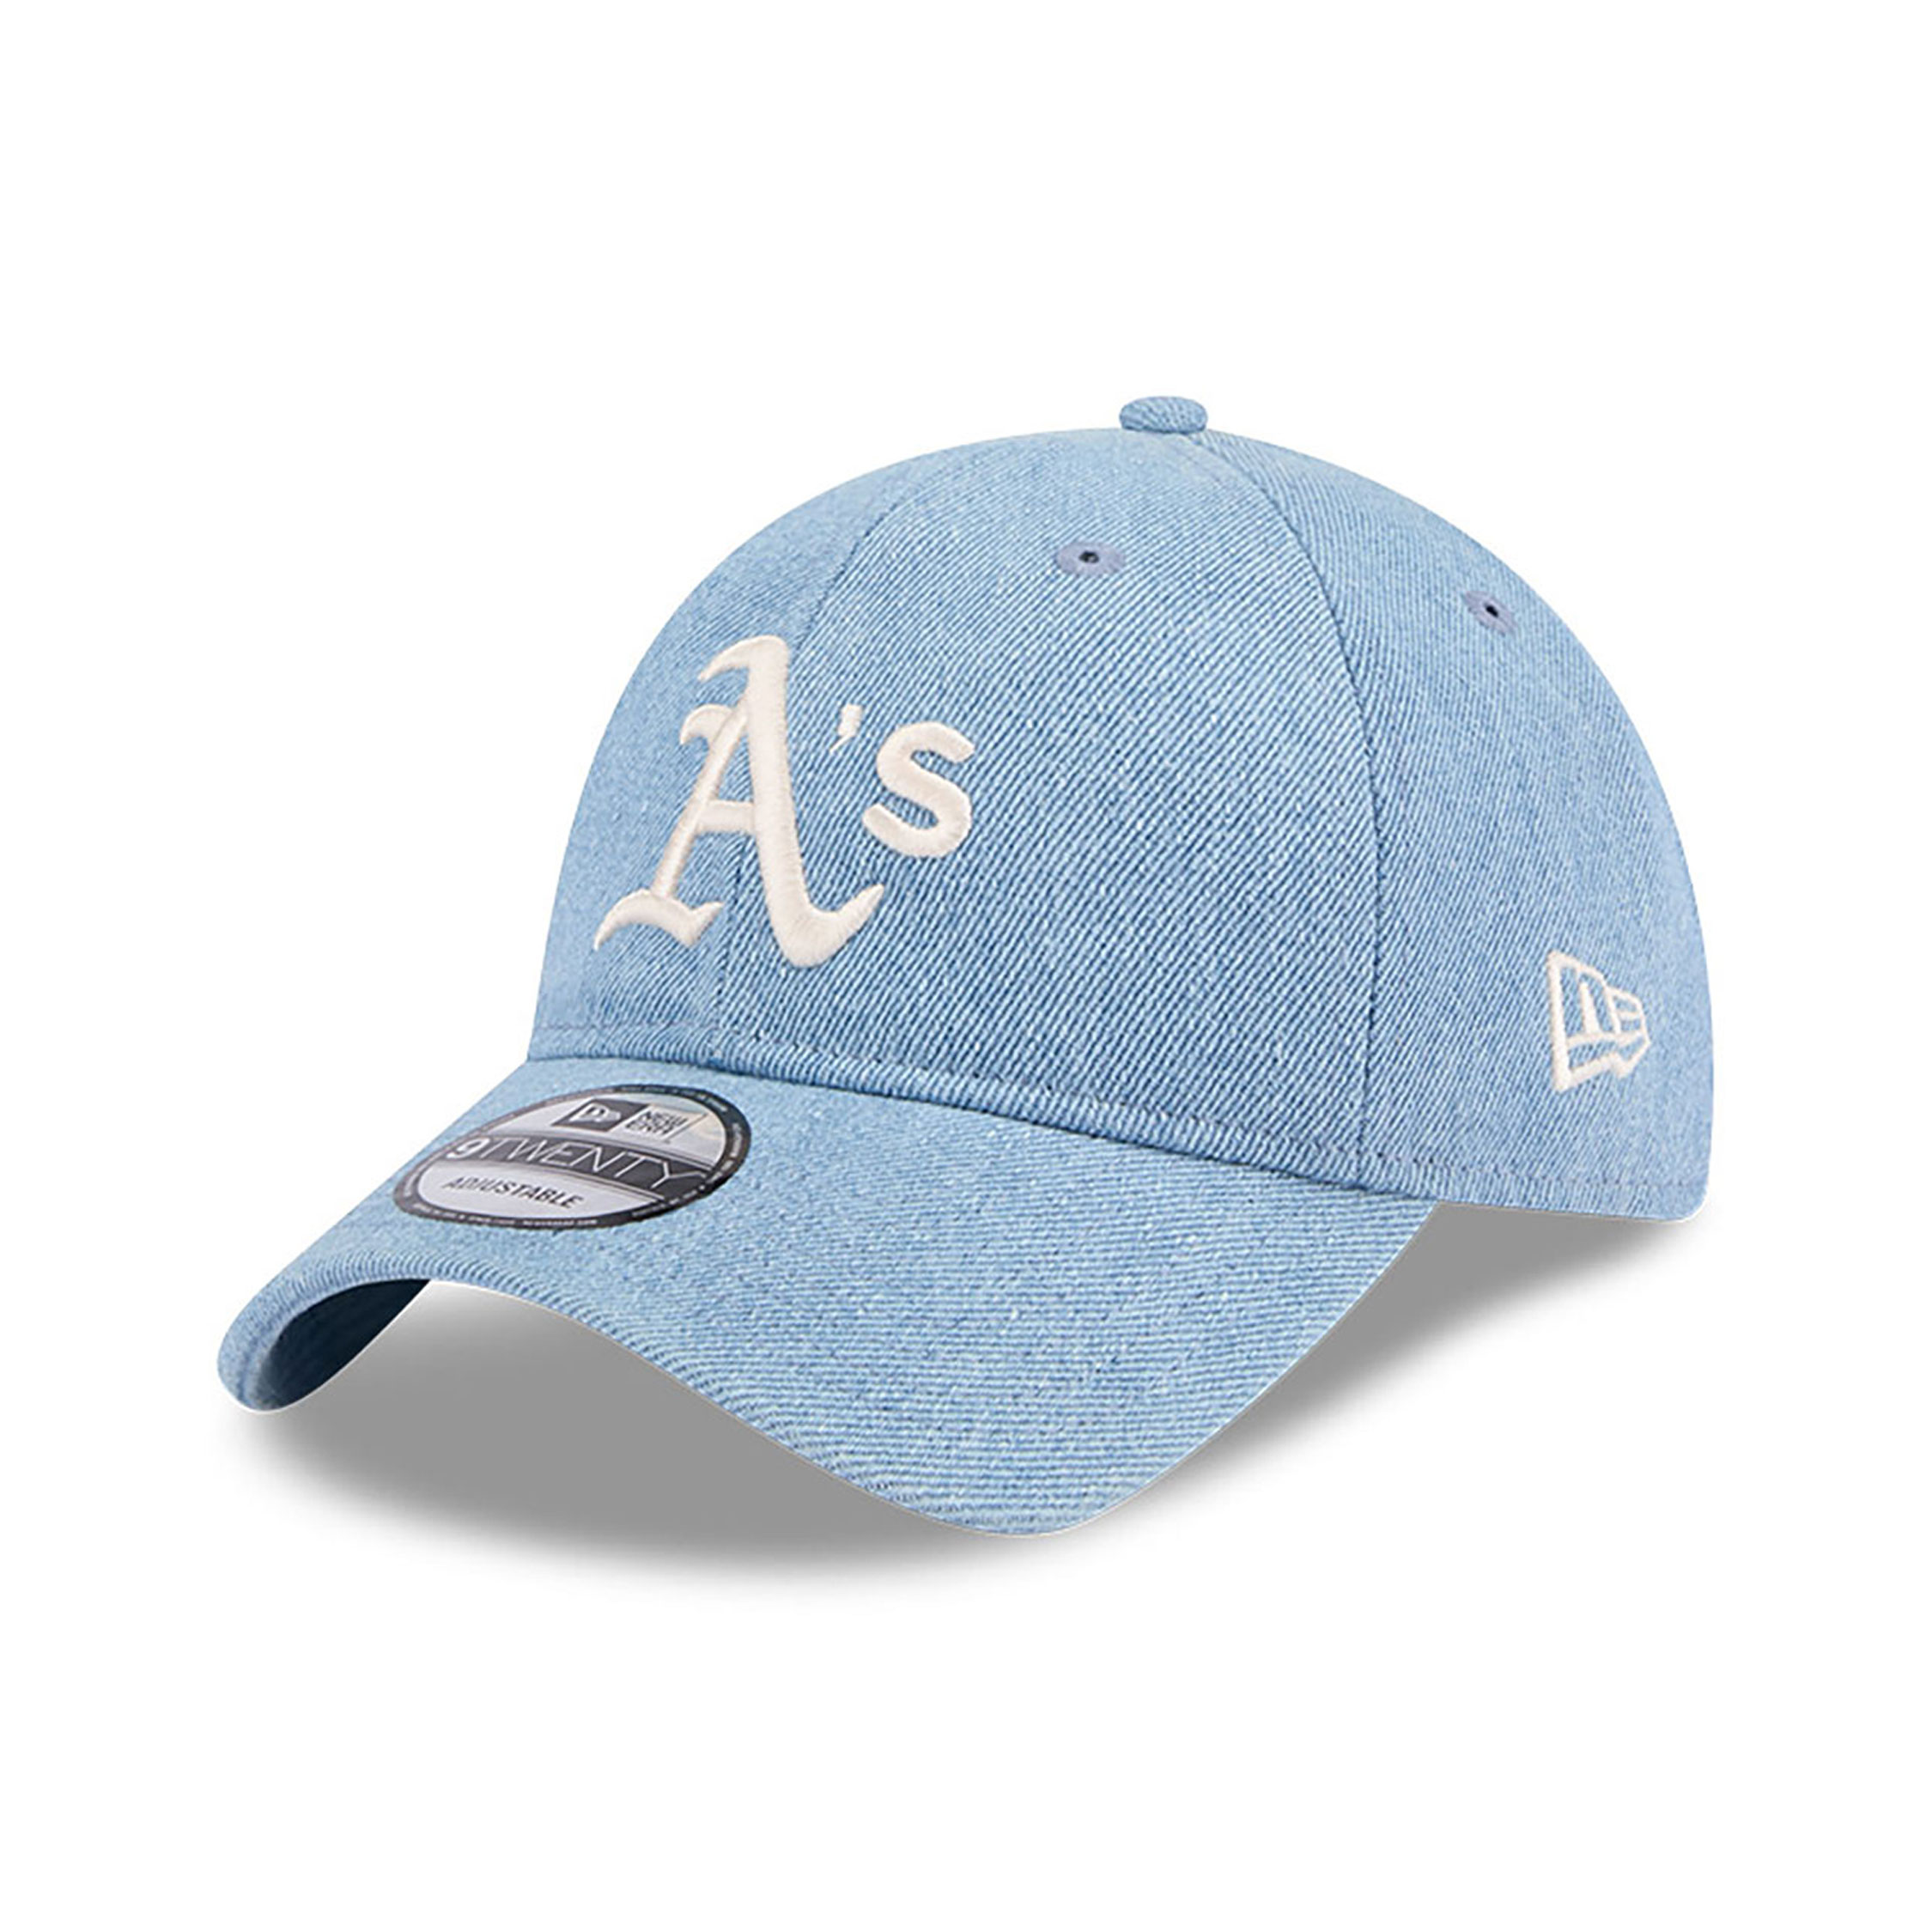 Oakland Athletics Washed Denim Light Blue 9TWENTY Adjustable Cap